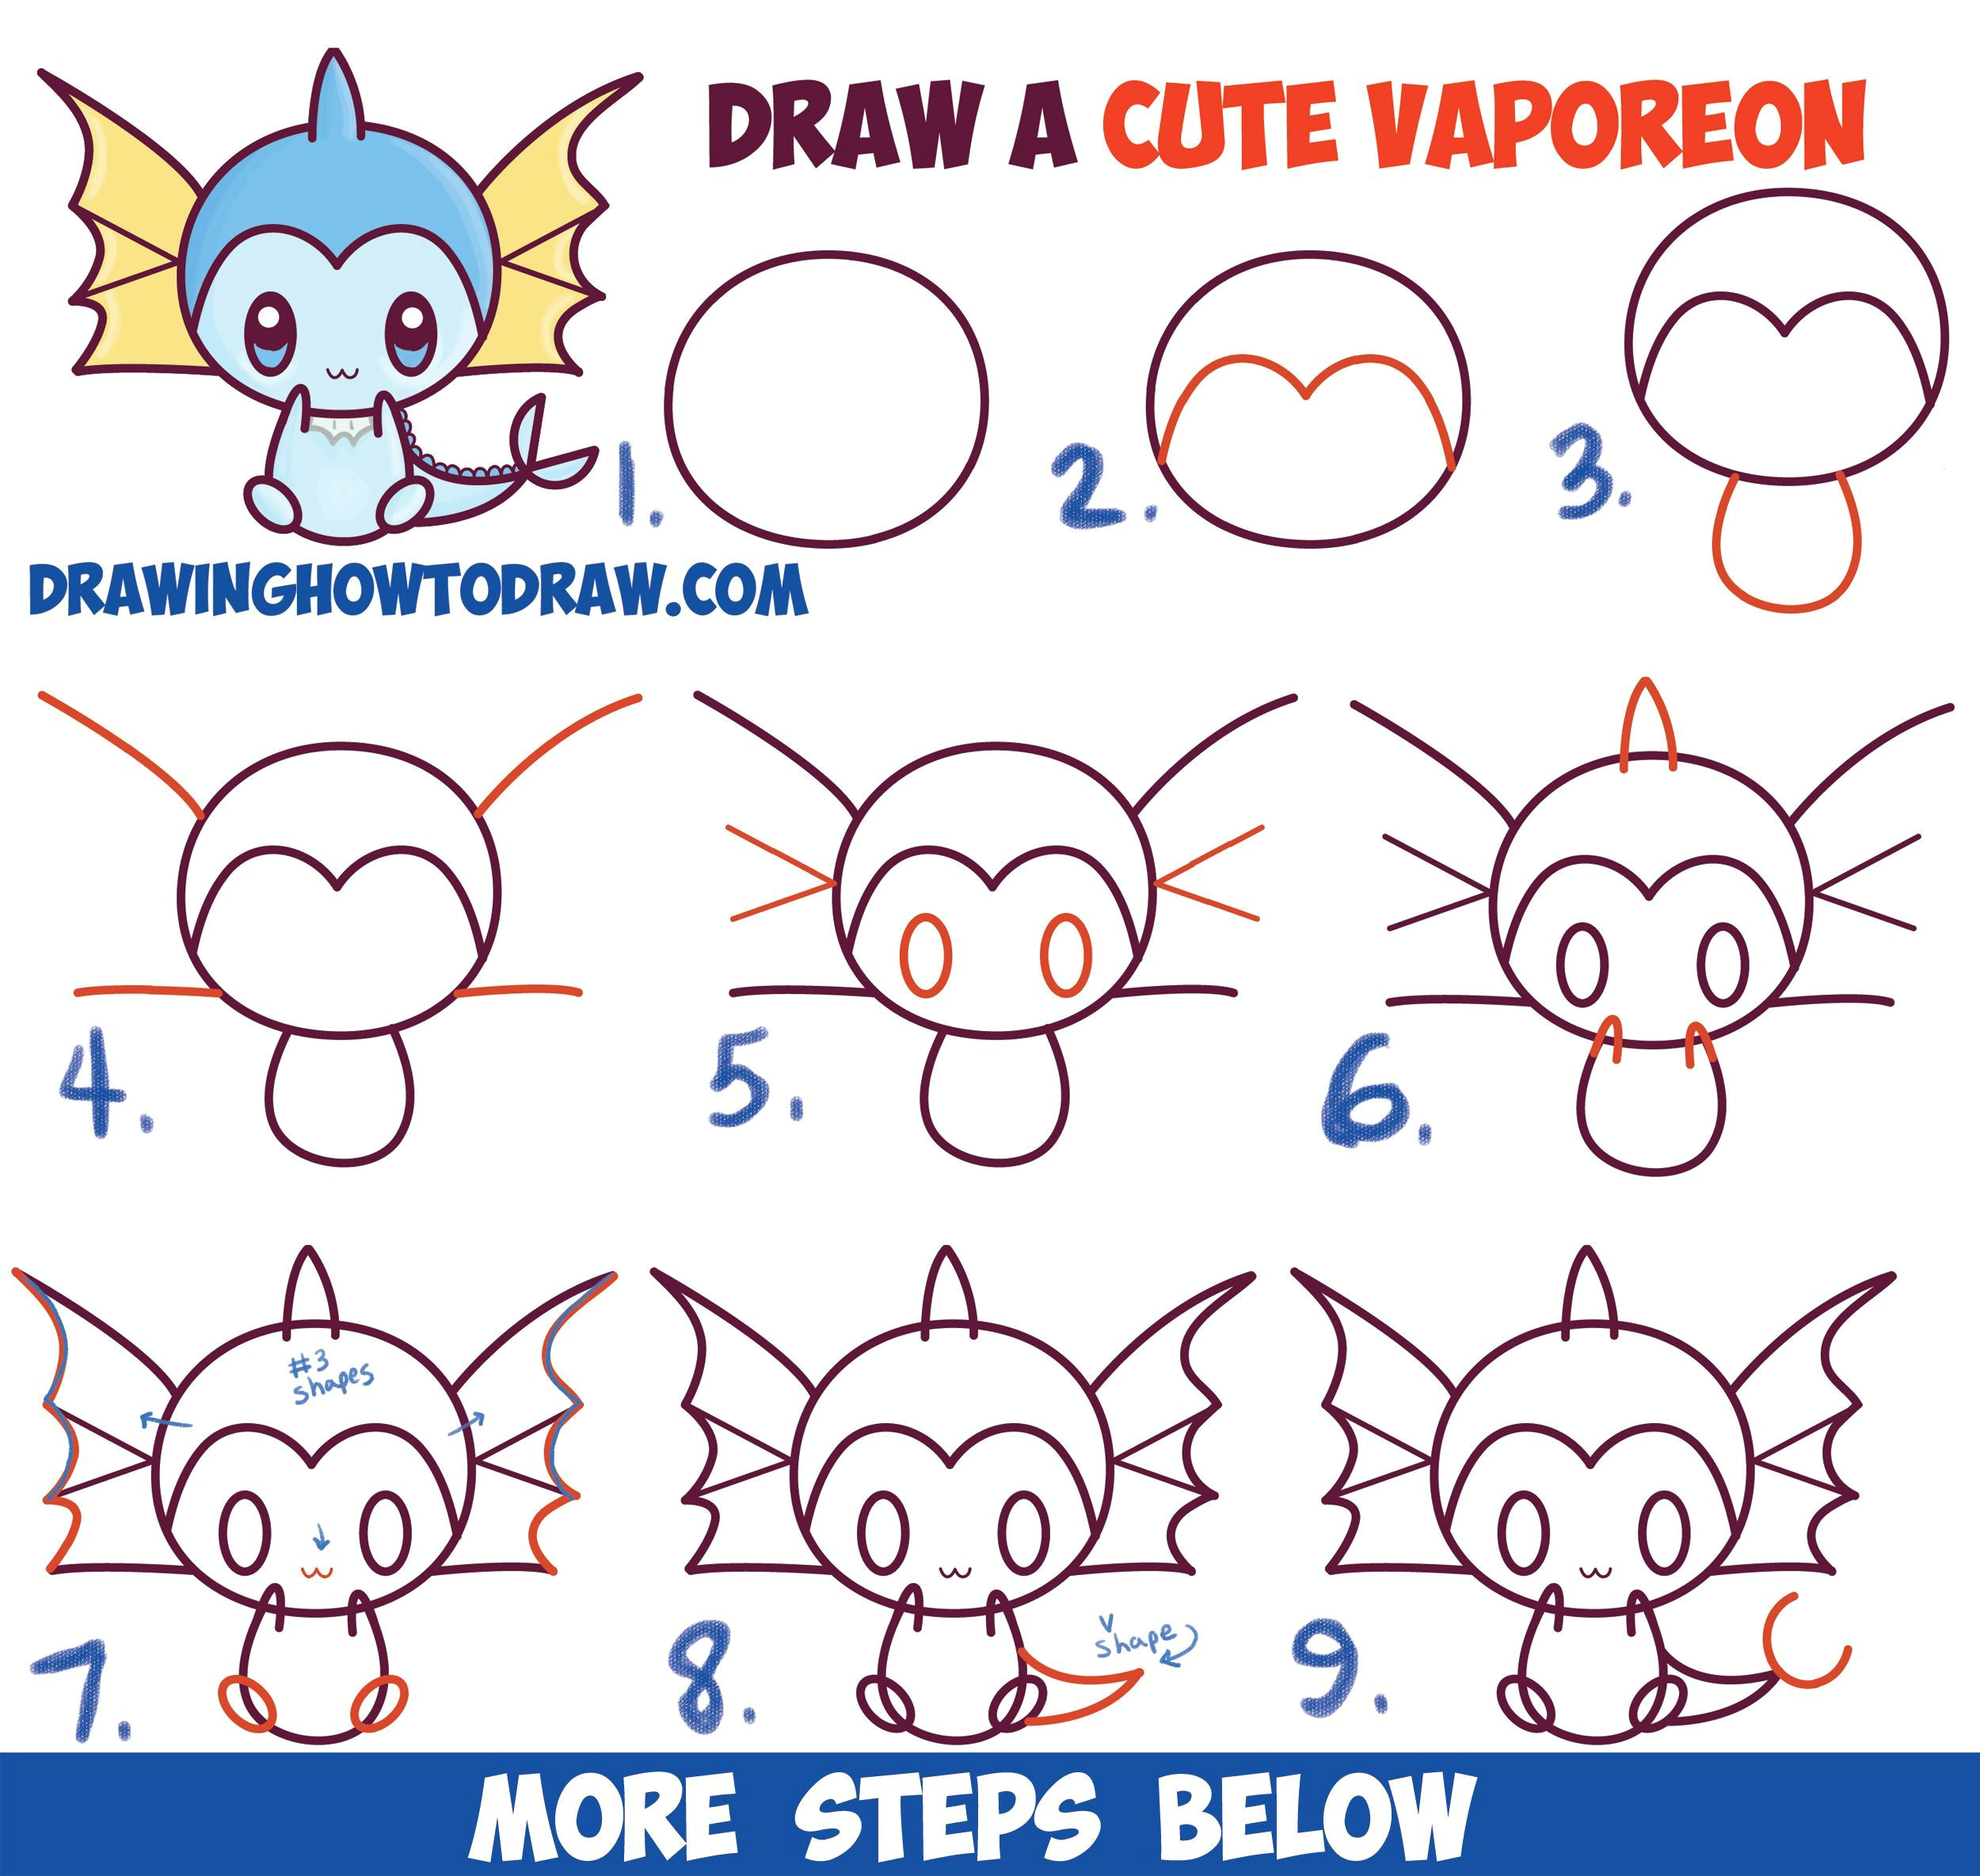 Easy Pikachu to Draw How to Draw Cute Kawaii Chibi Vaporeon From Pokemon Easy